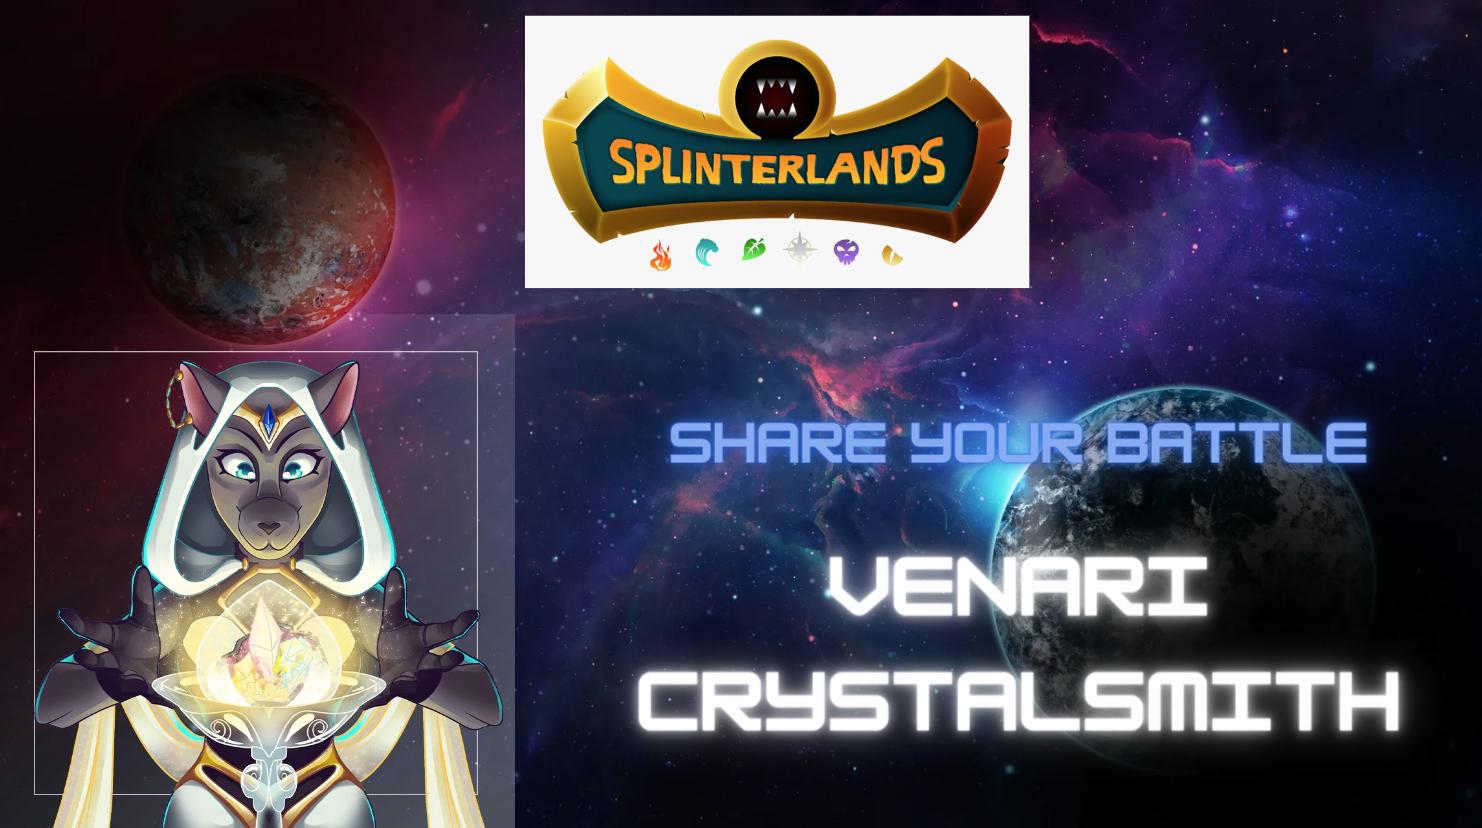 @vaynard86/share-your-battle-venari-crystalsmith